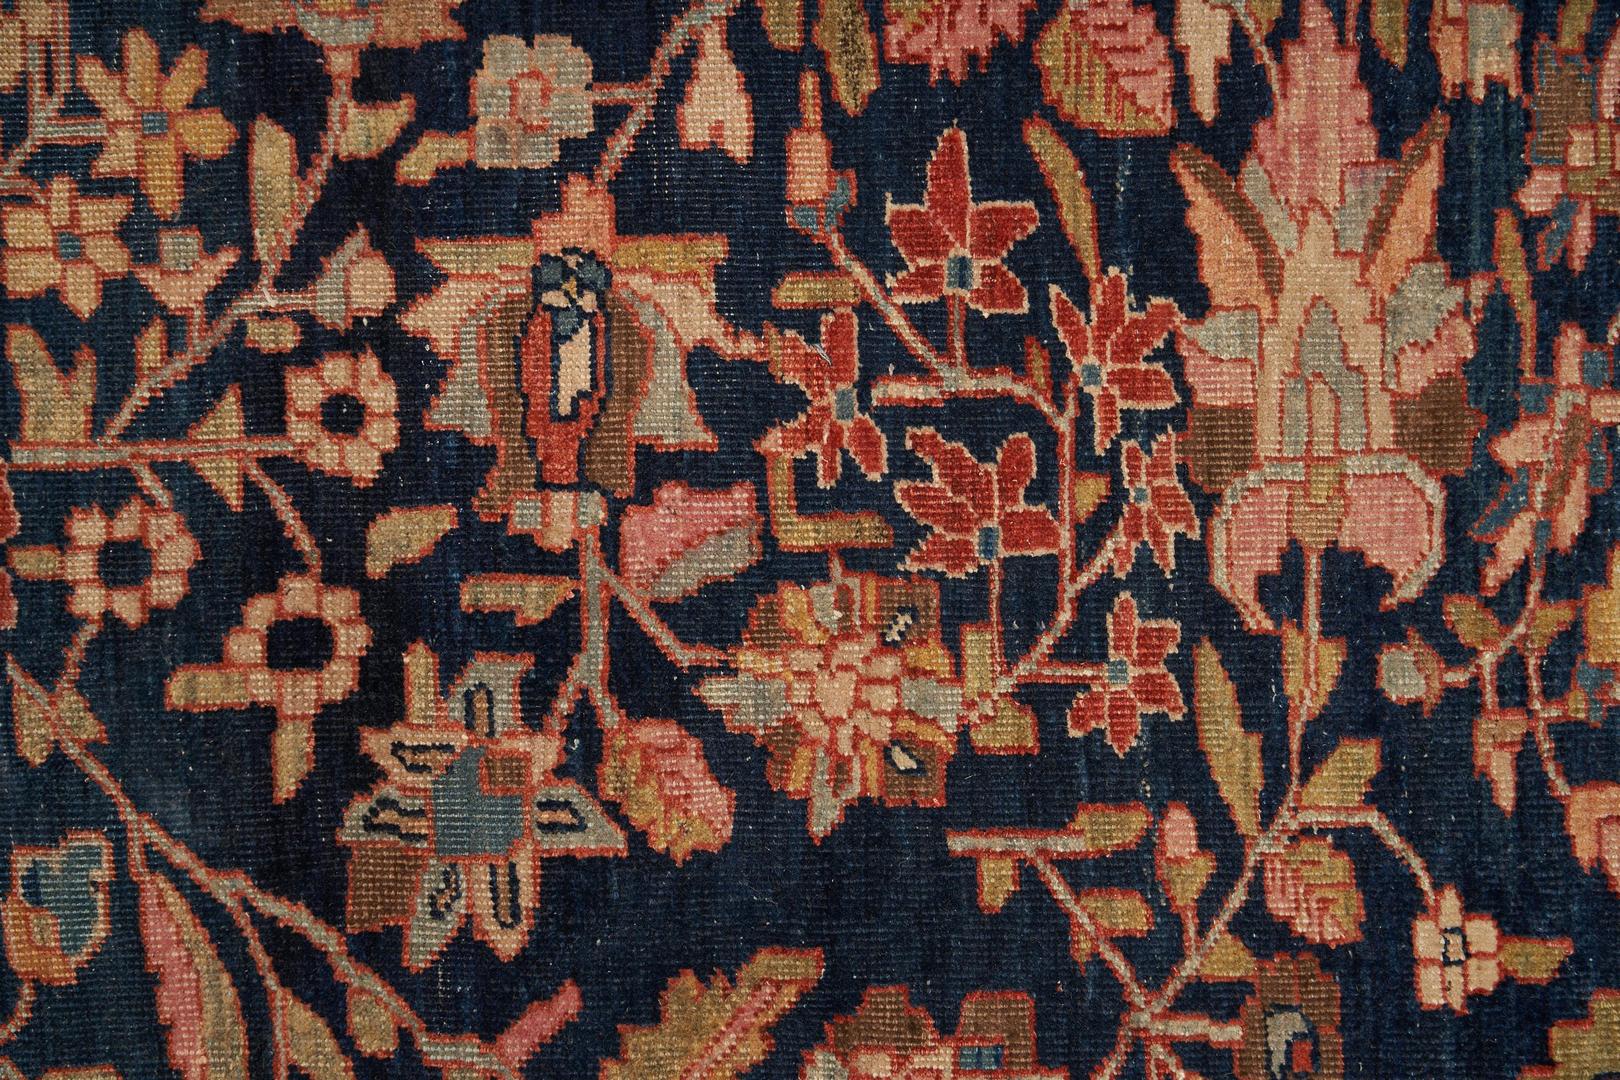 Lot 487: Antique Persian Sarouk Rug or Carpet, 13' x 10'